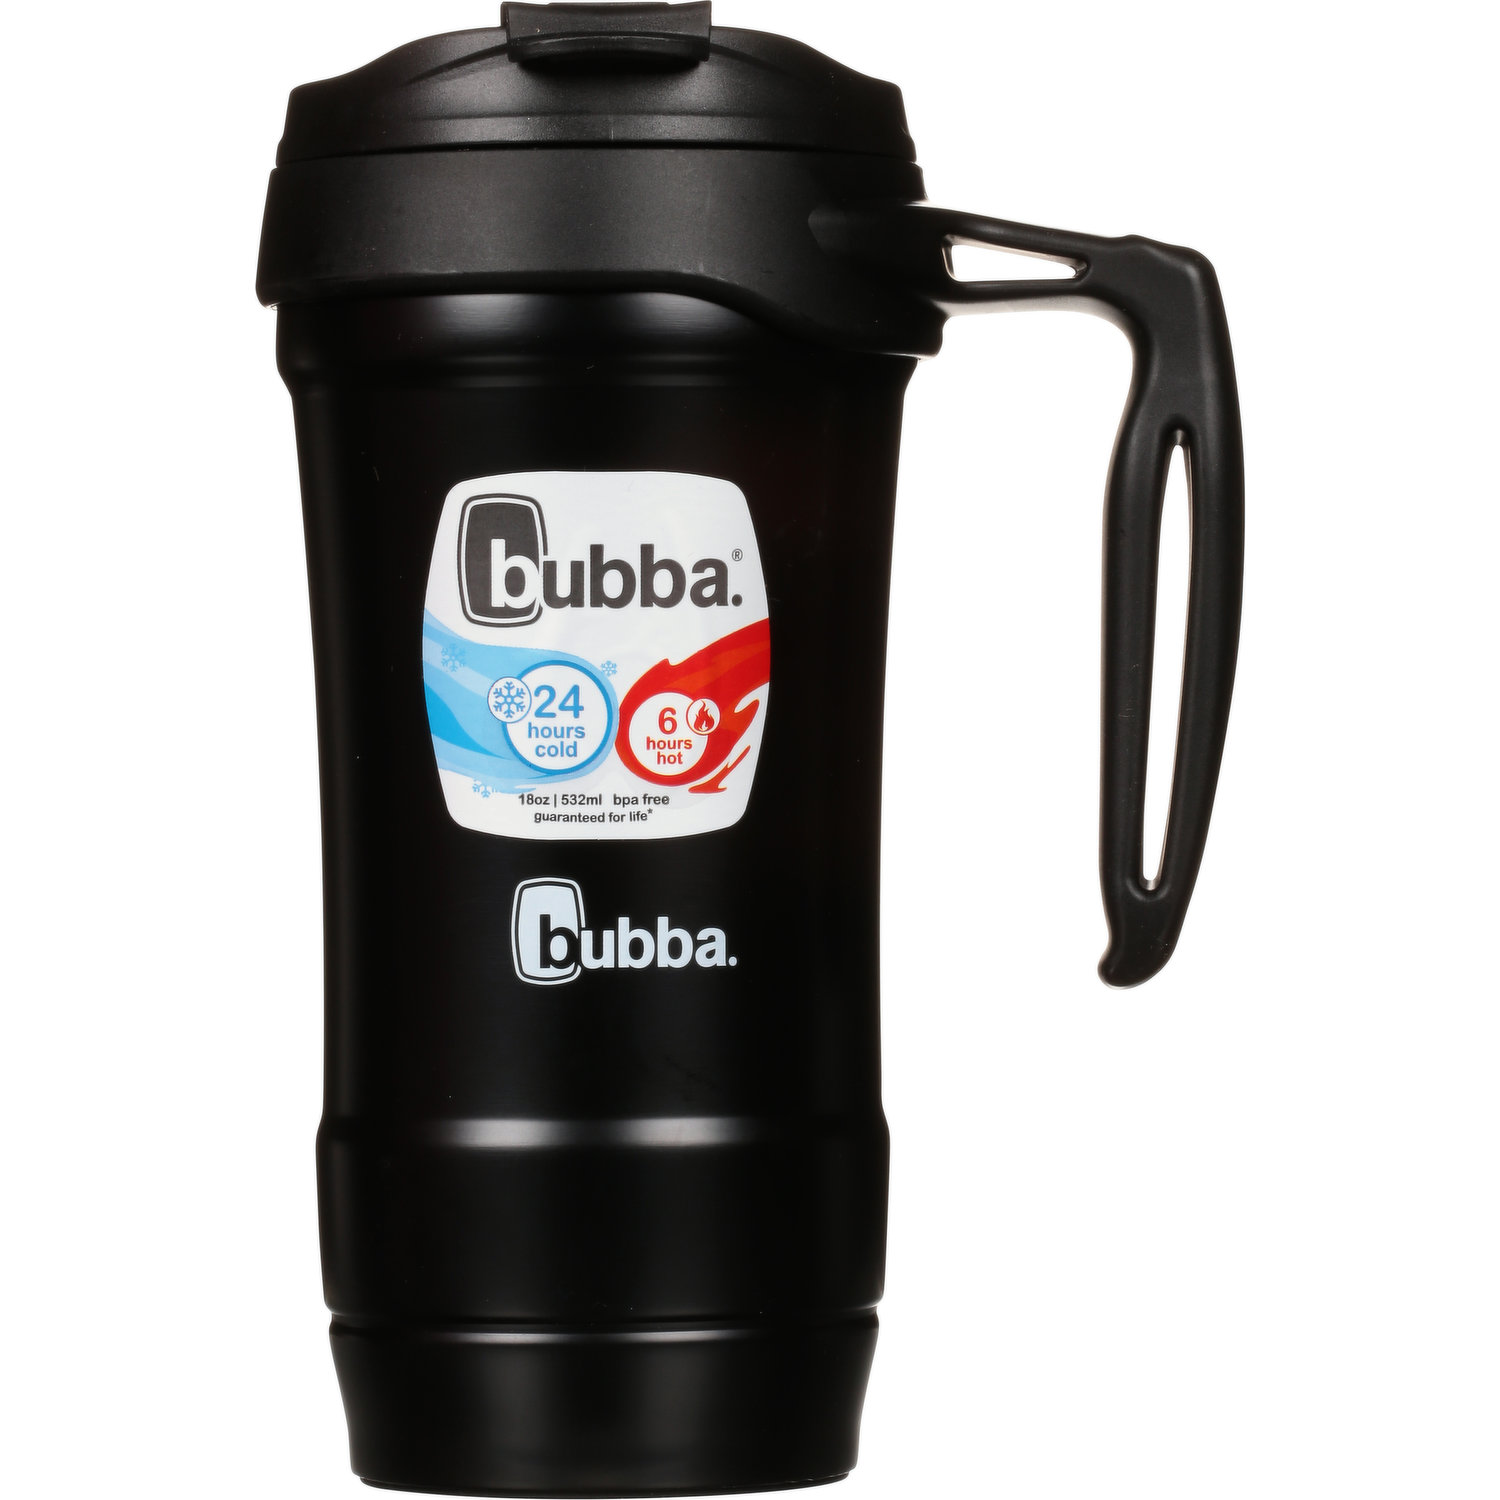  Bubba Hero Sport Kids Insulated Stainless Steel Water Bottle